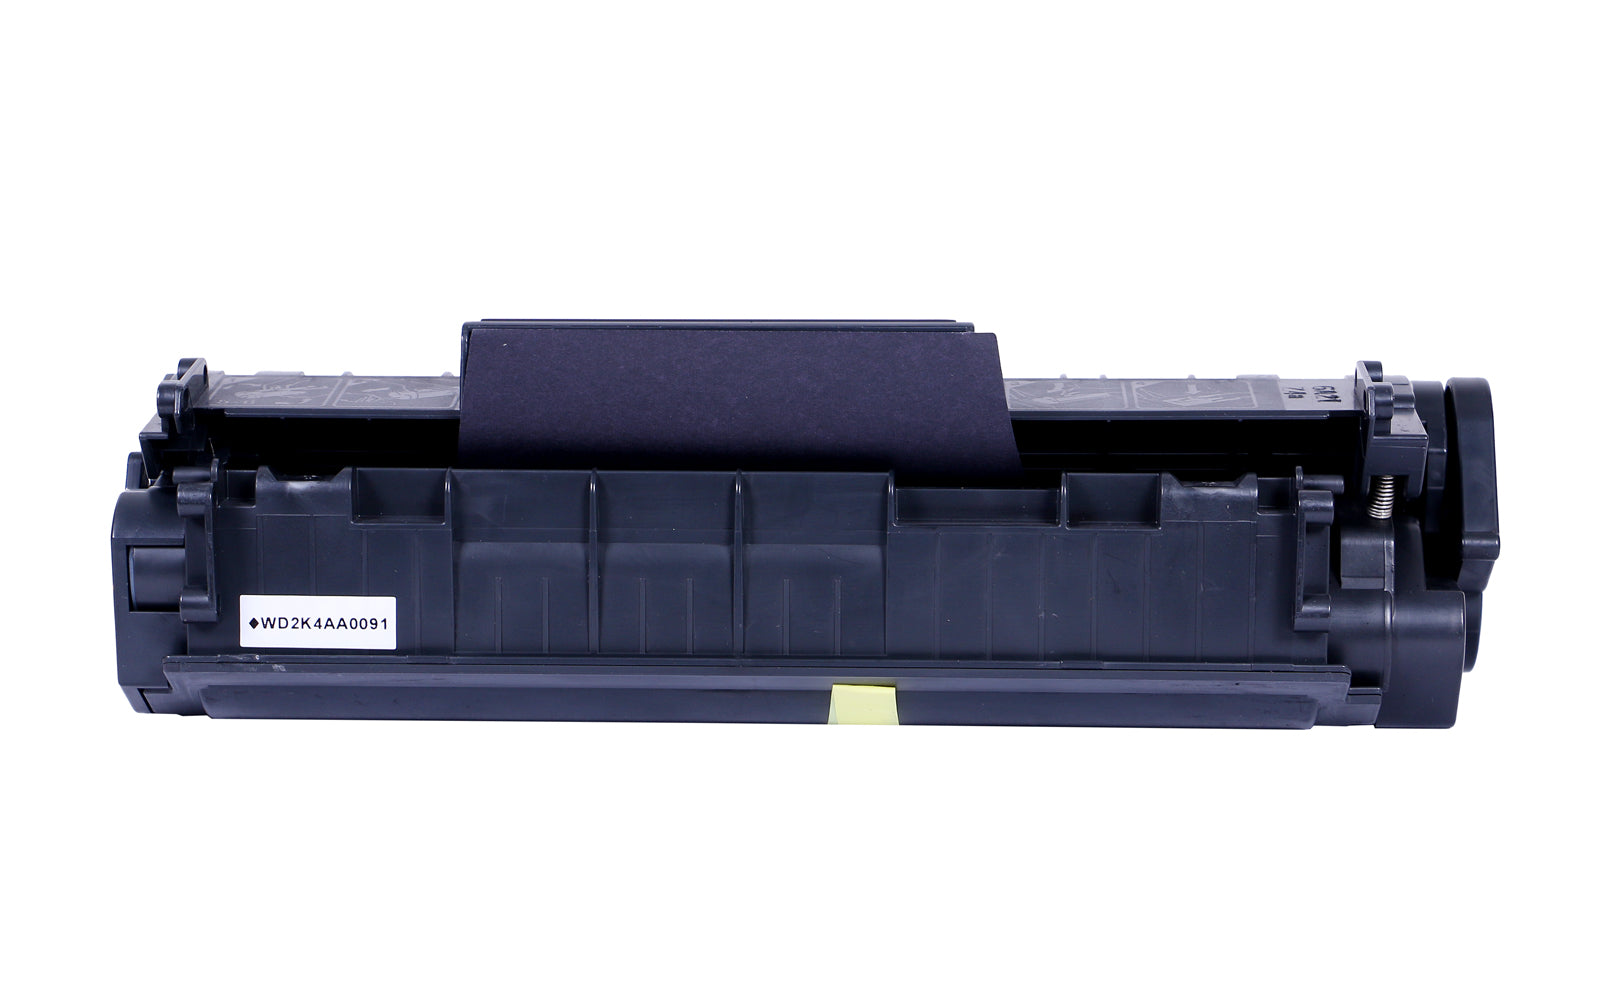 SKY Plus 12A Remanufactured Toner Cartridge for HP Laserjet  1018 1020 3015  3030